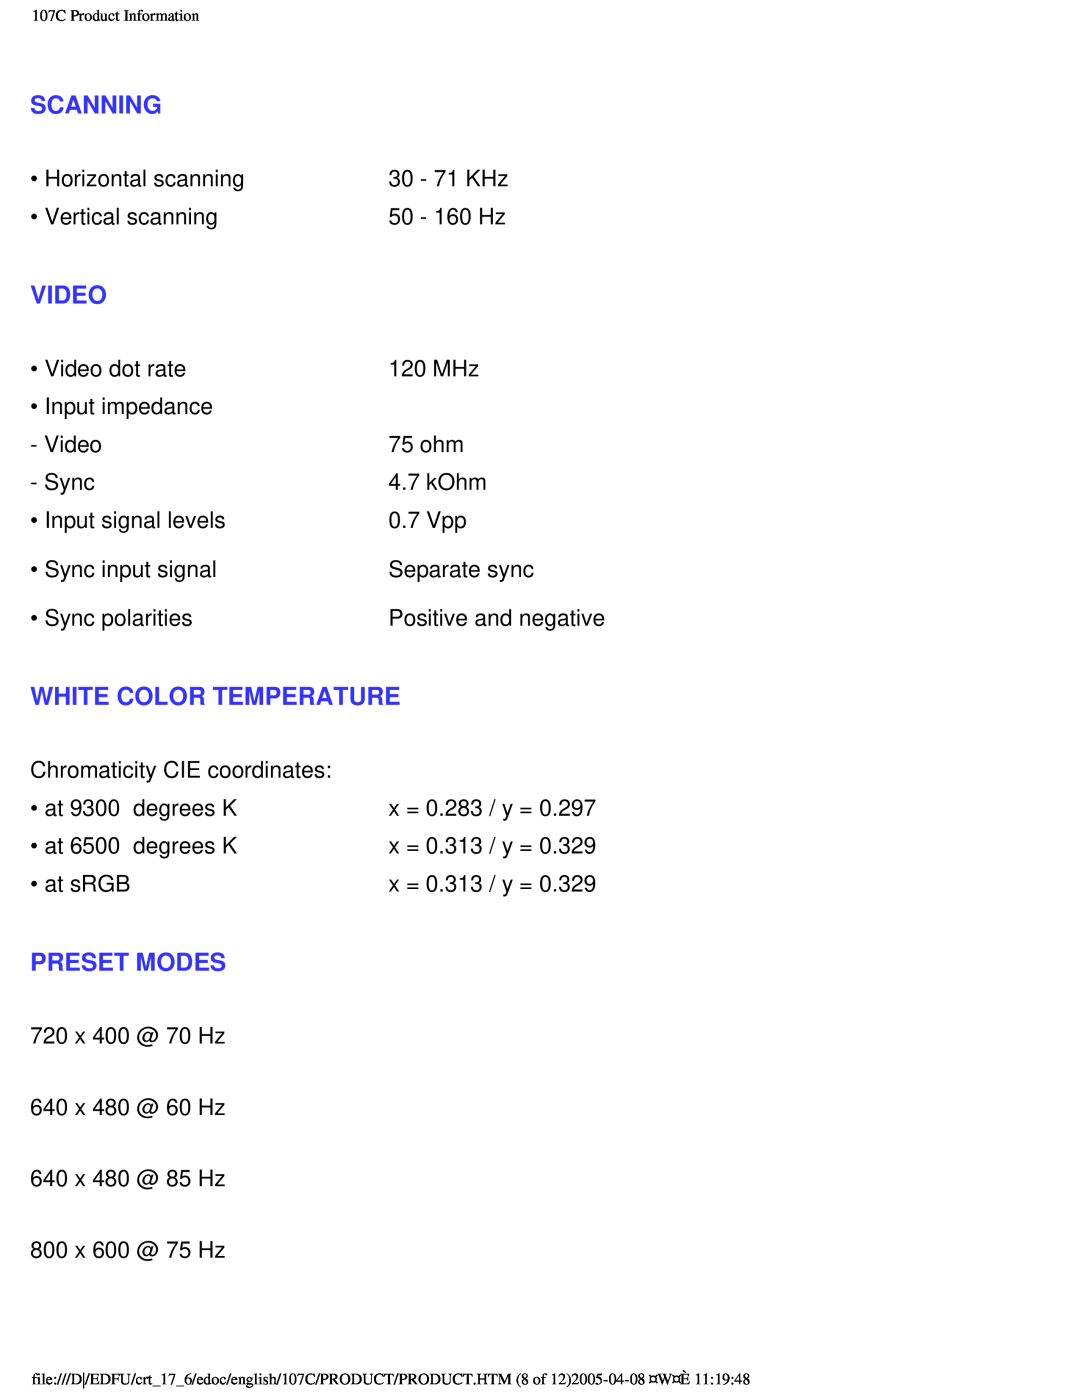 Philips 107C65 user manual Scanning, Video, White Color Temperature, Preset Modes 